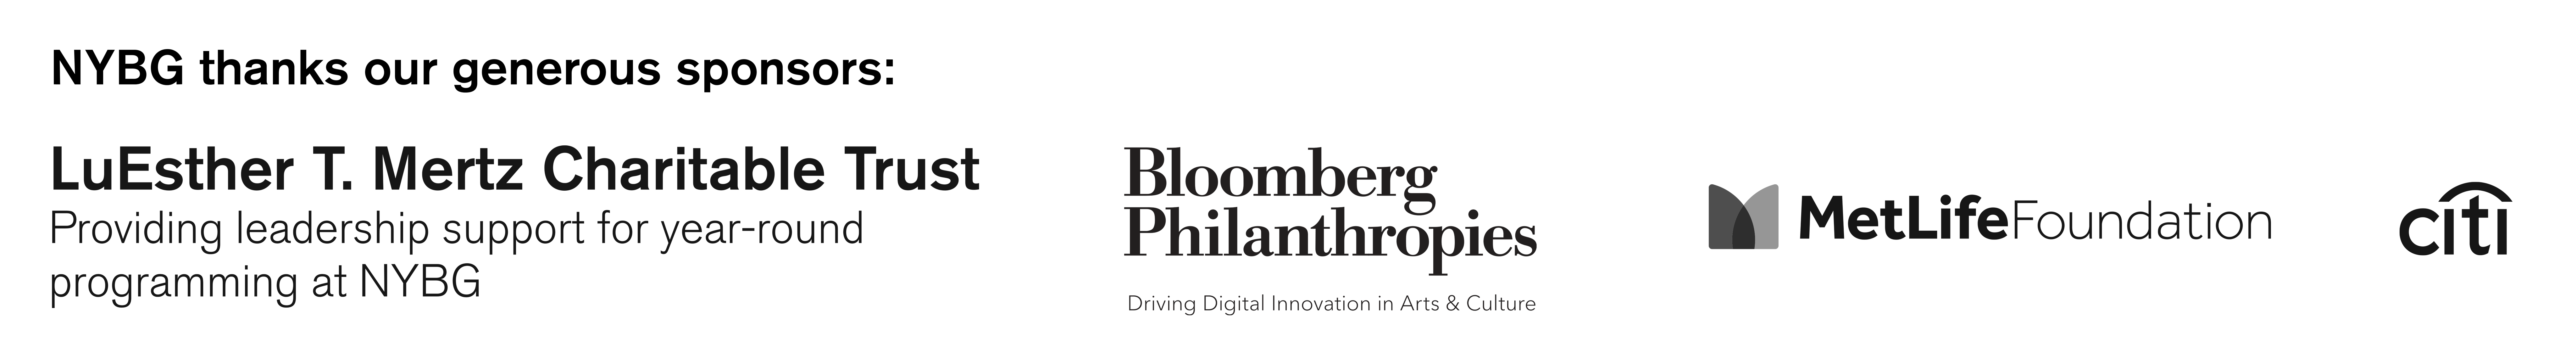 NYBG thanks our generous sponsors: LuEsther T. Mertz Charitable Trust, Bloomberg Philanthropies logo, MetLife Foundation logo, and Citi Bank logo